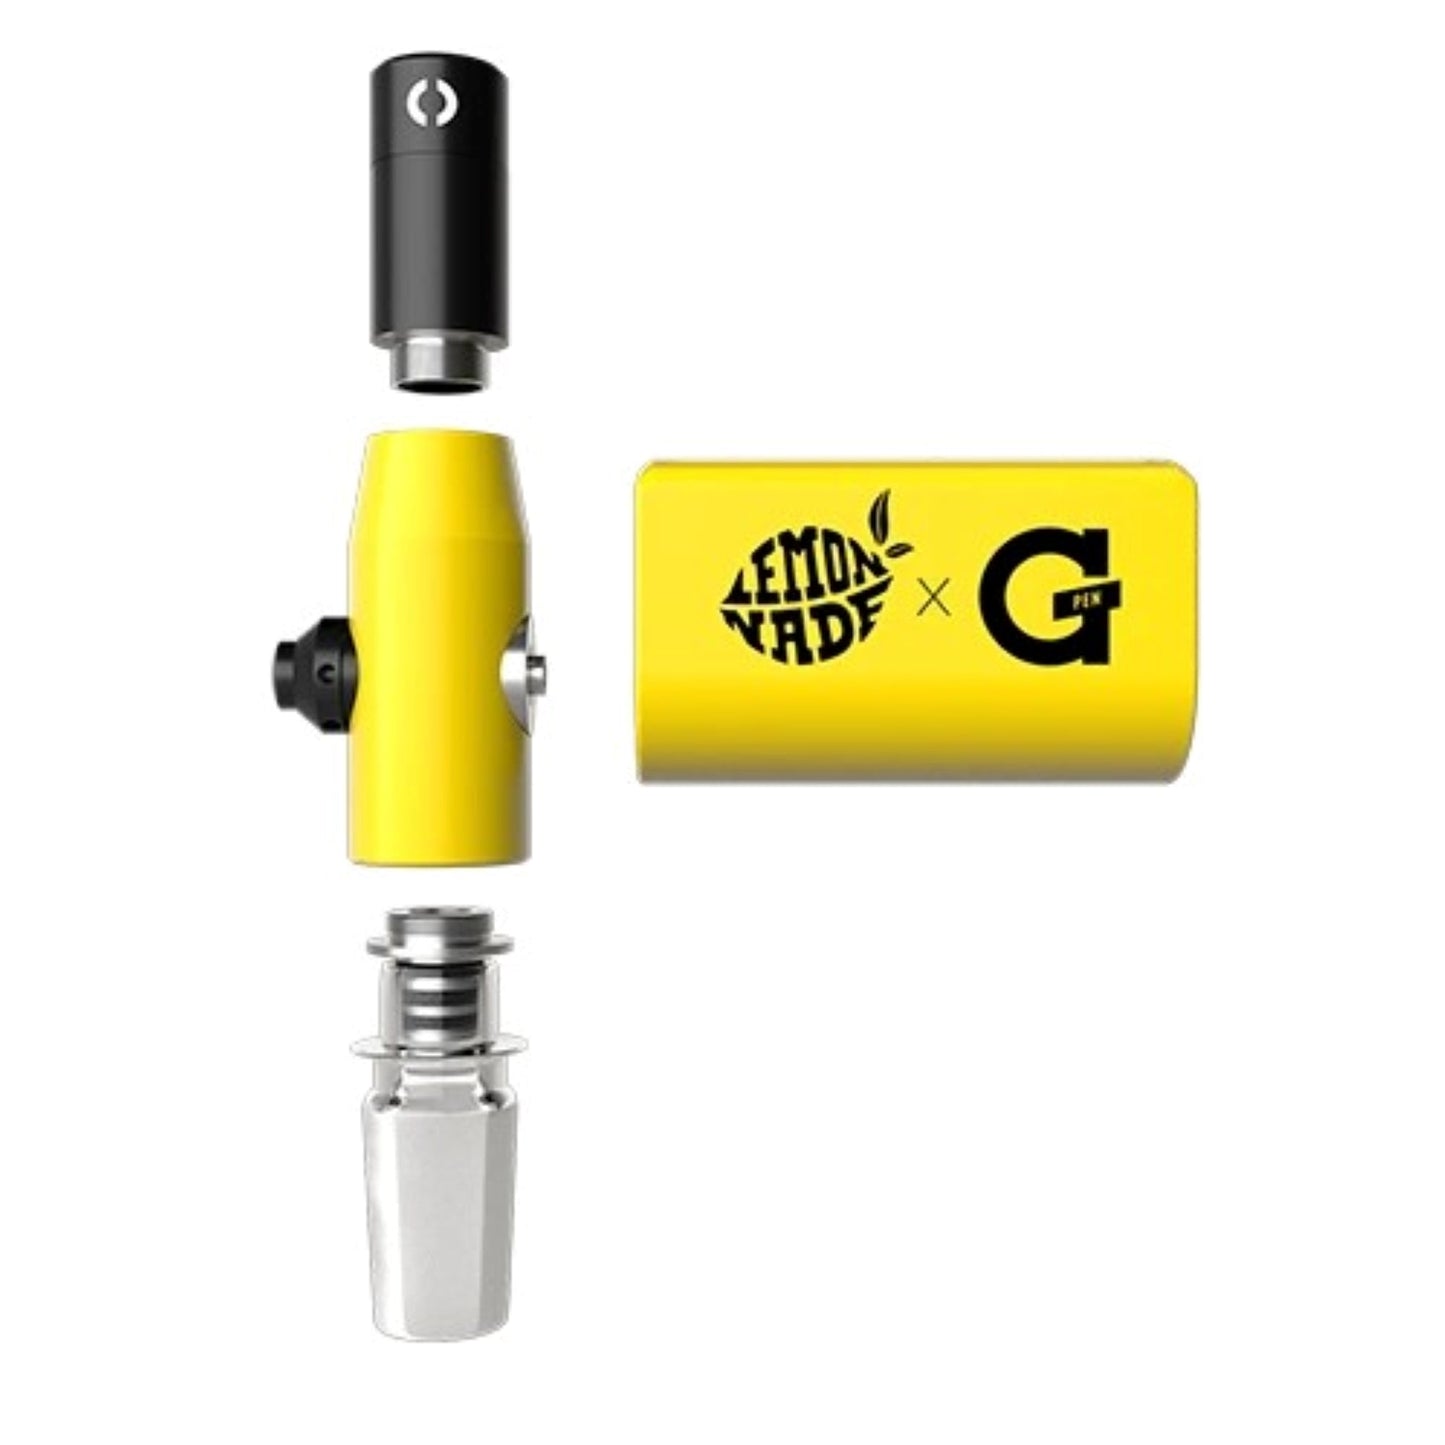 Lemonnade x G Pen Connect E-Nail Vaporizer